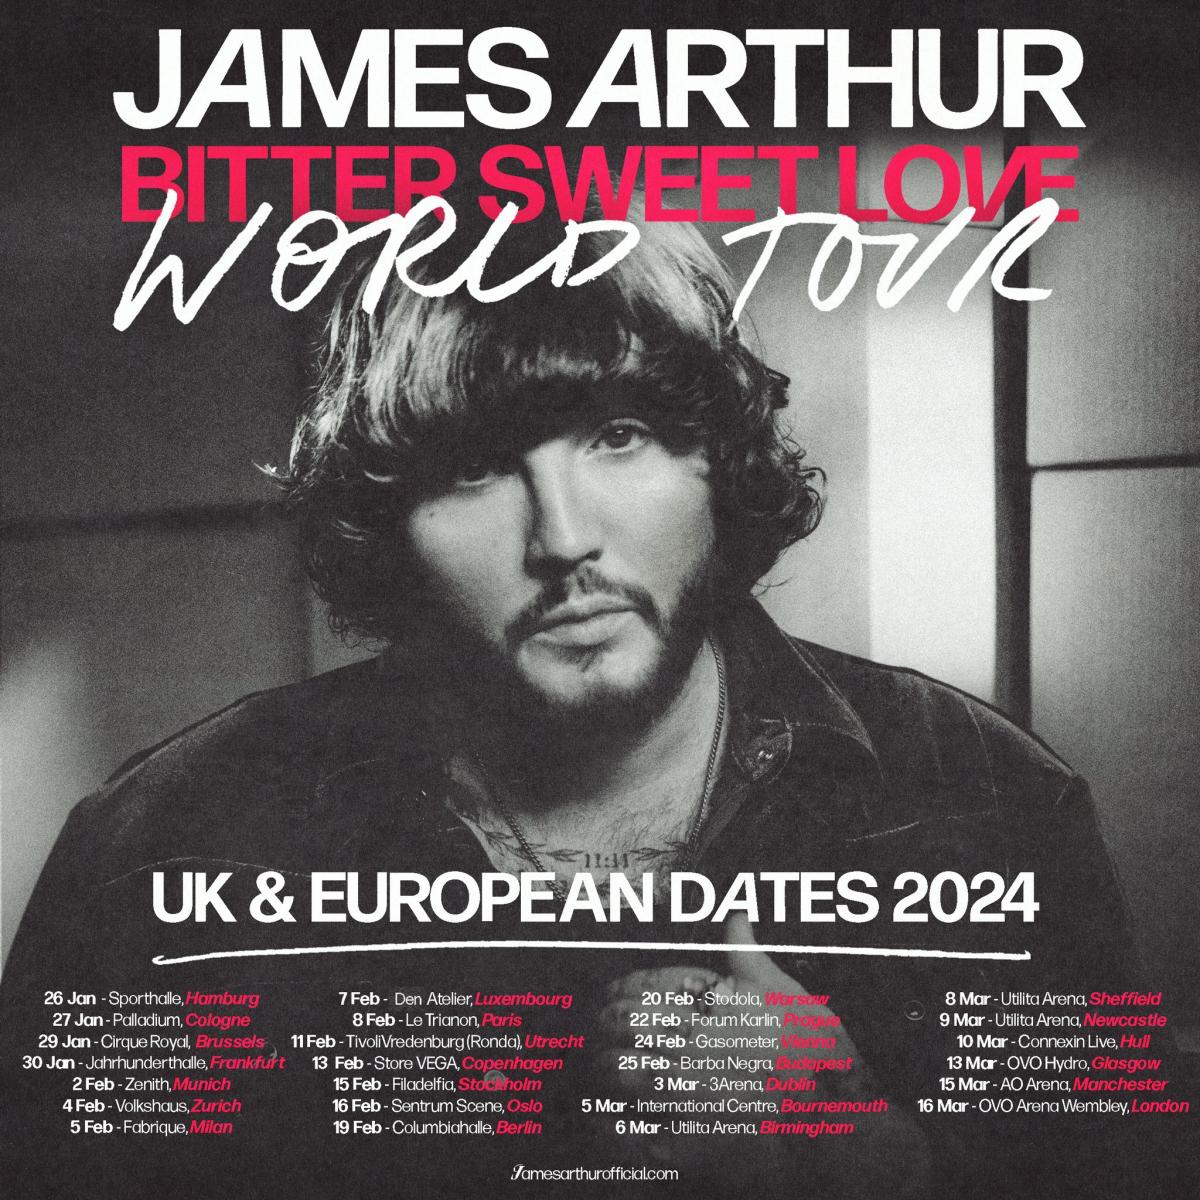 James Arthur Tickets For UK and European Bitter Sweet Love World Tour